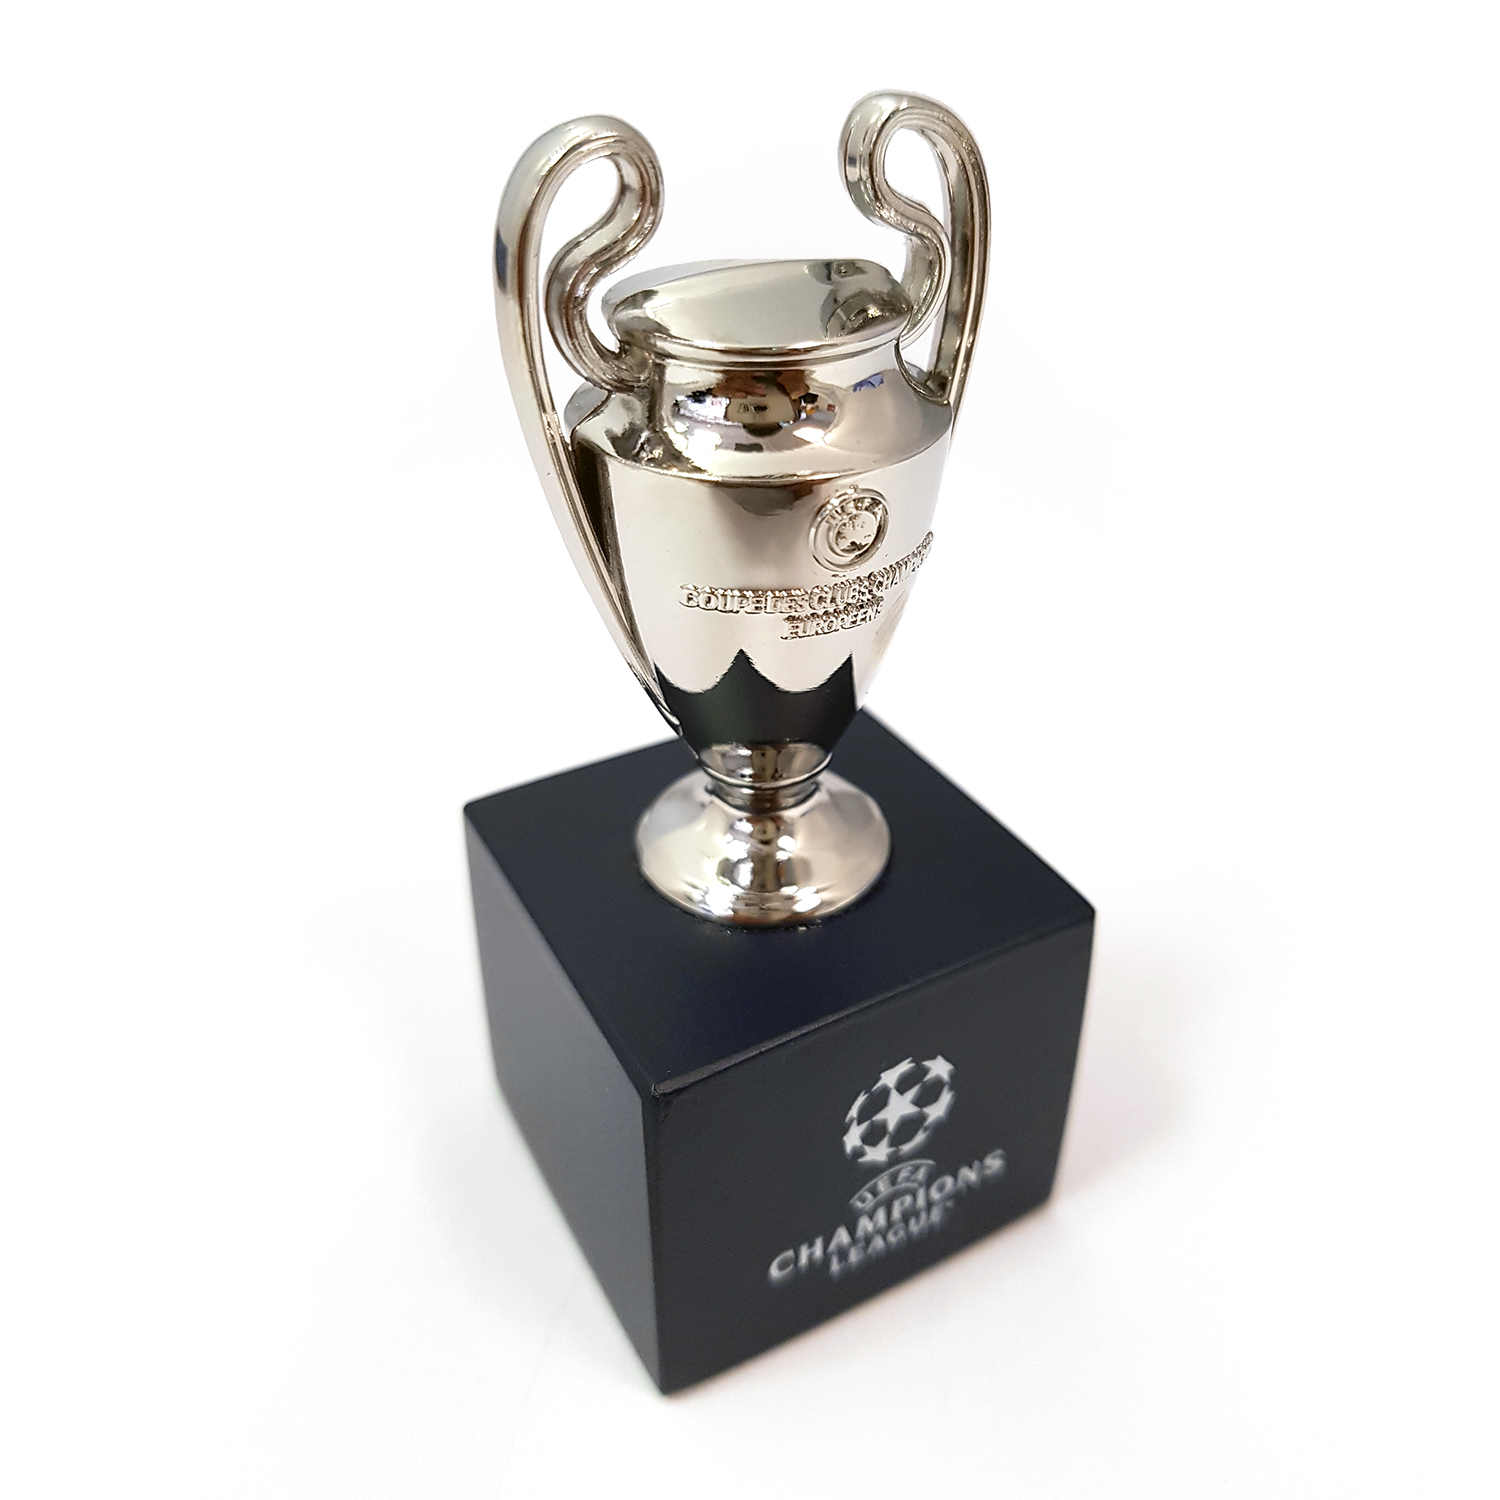 Ygo Champions League Trophy UEFA Troféus Futebol Réplica Prêmio